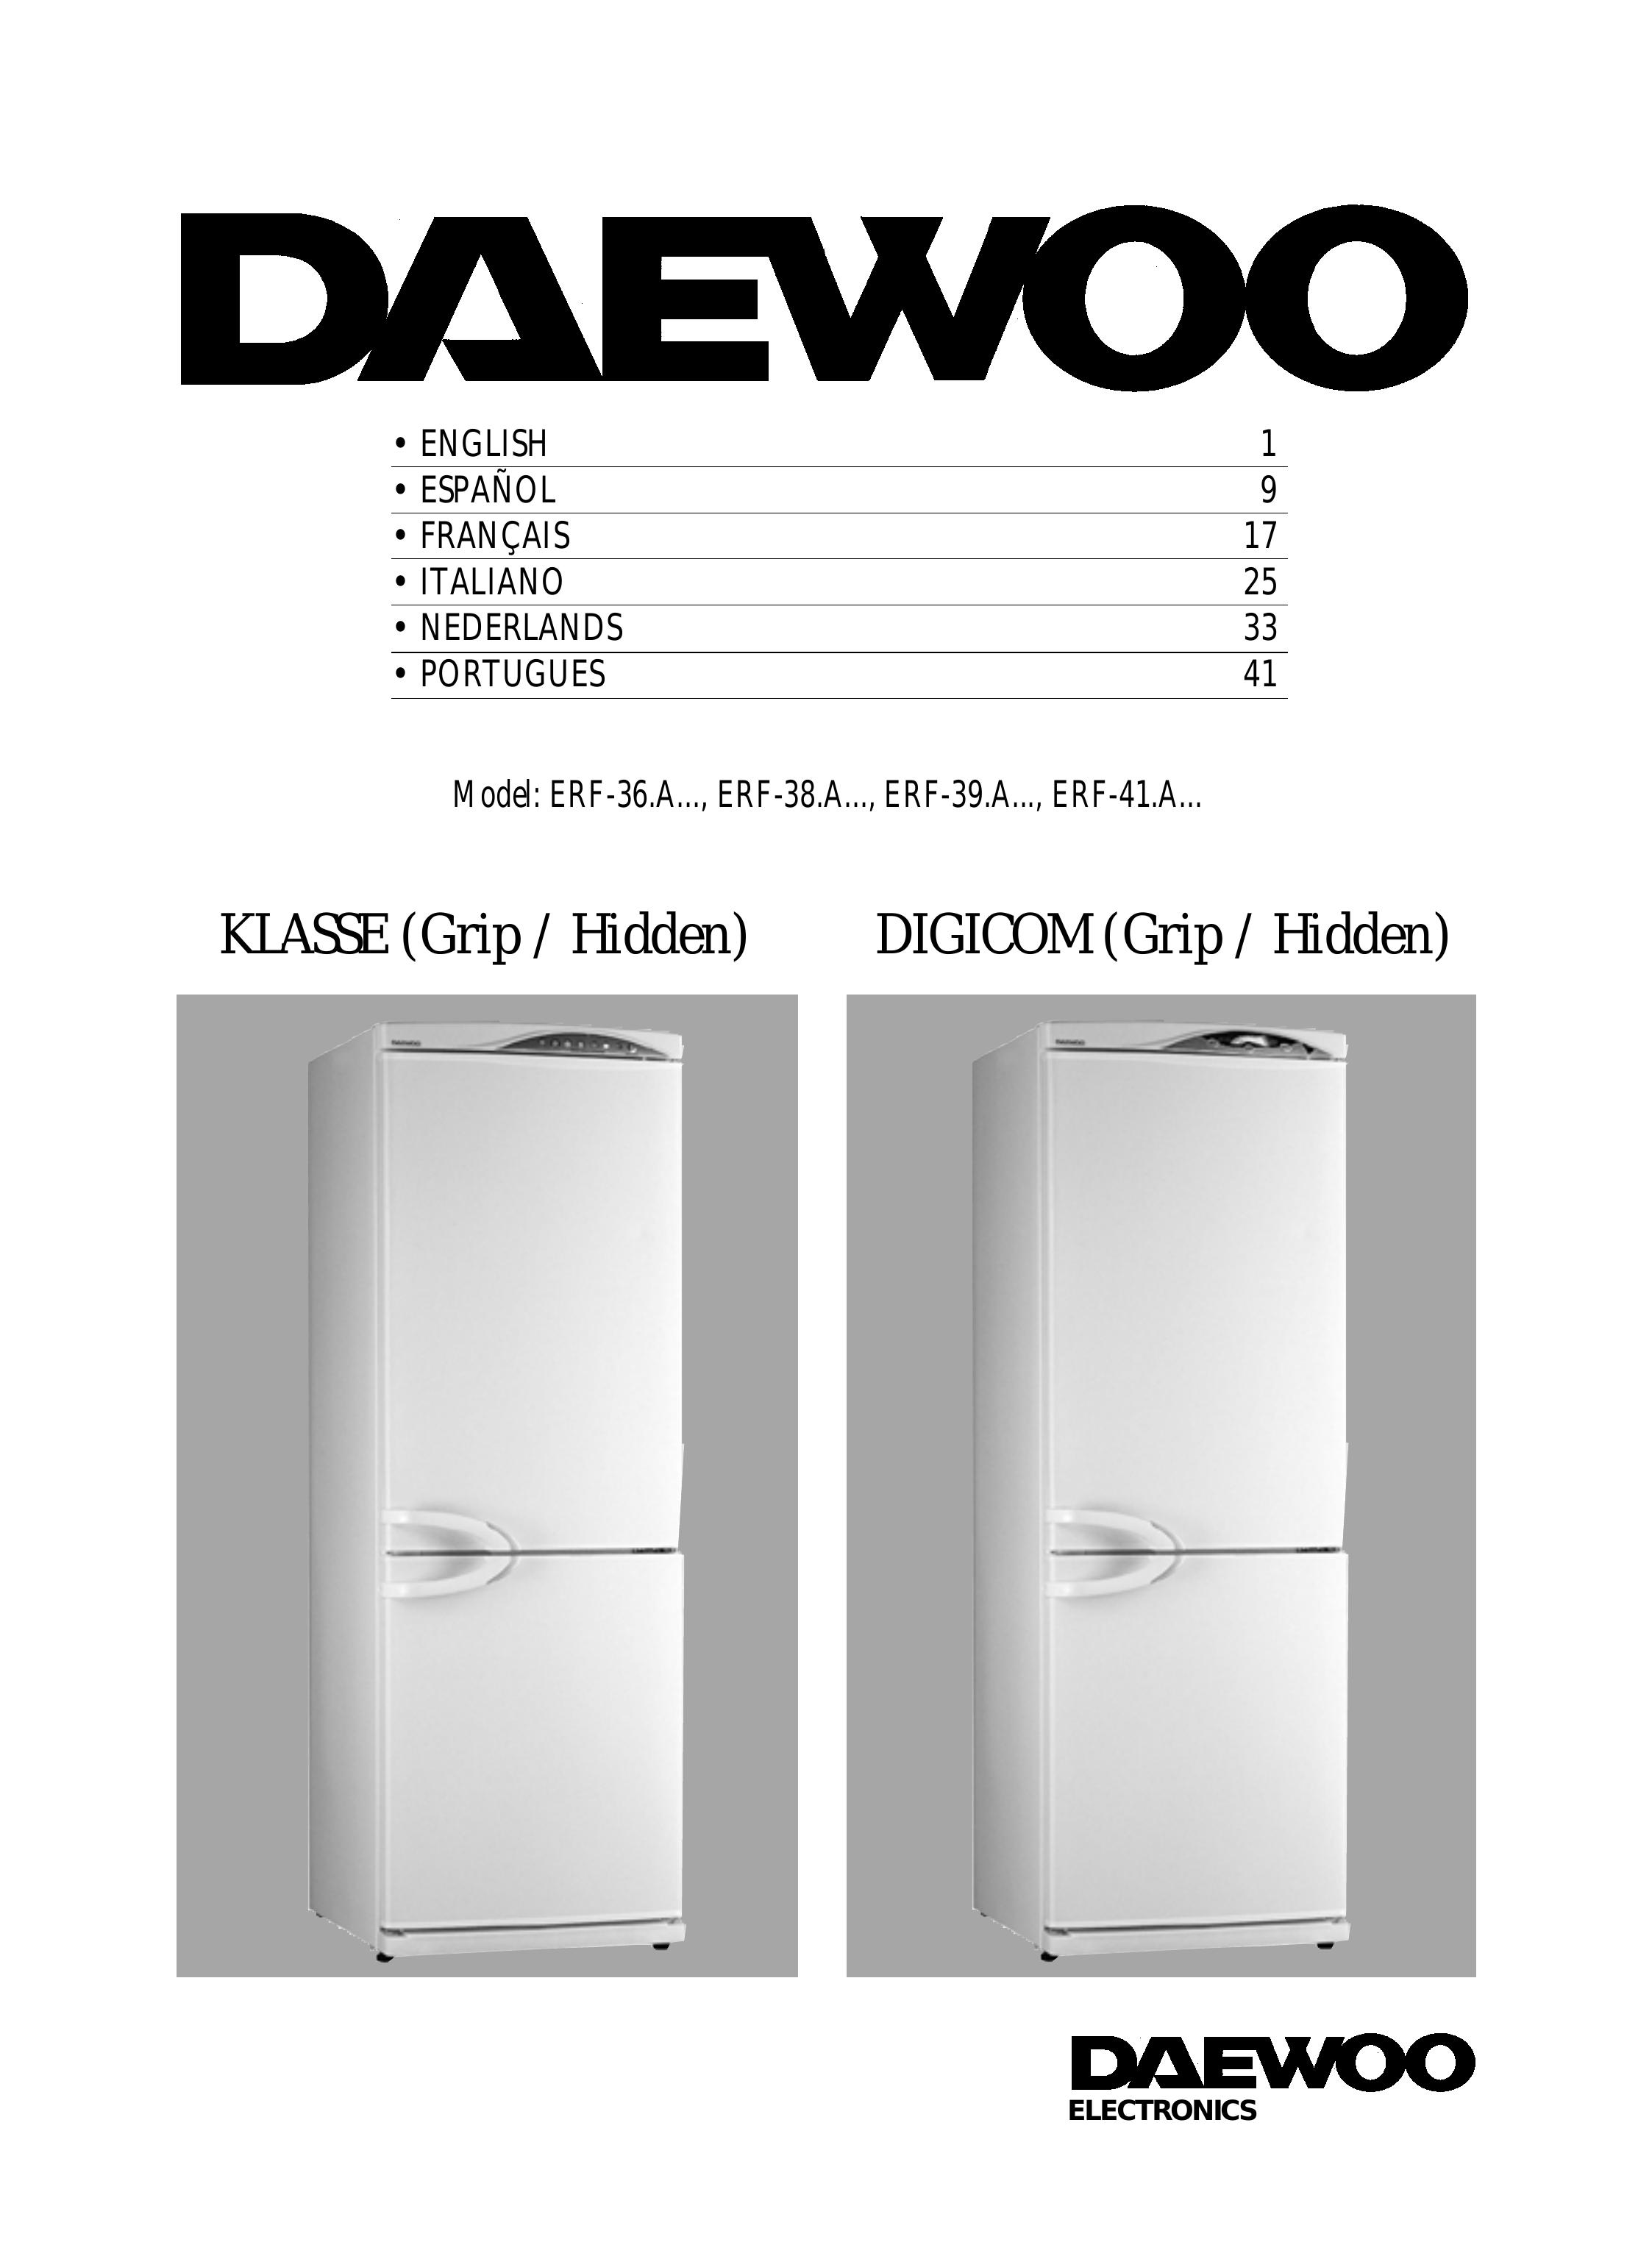 Daewoo ERF-36.A Refrigerator User Manual